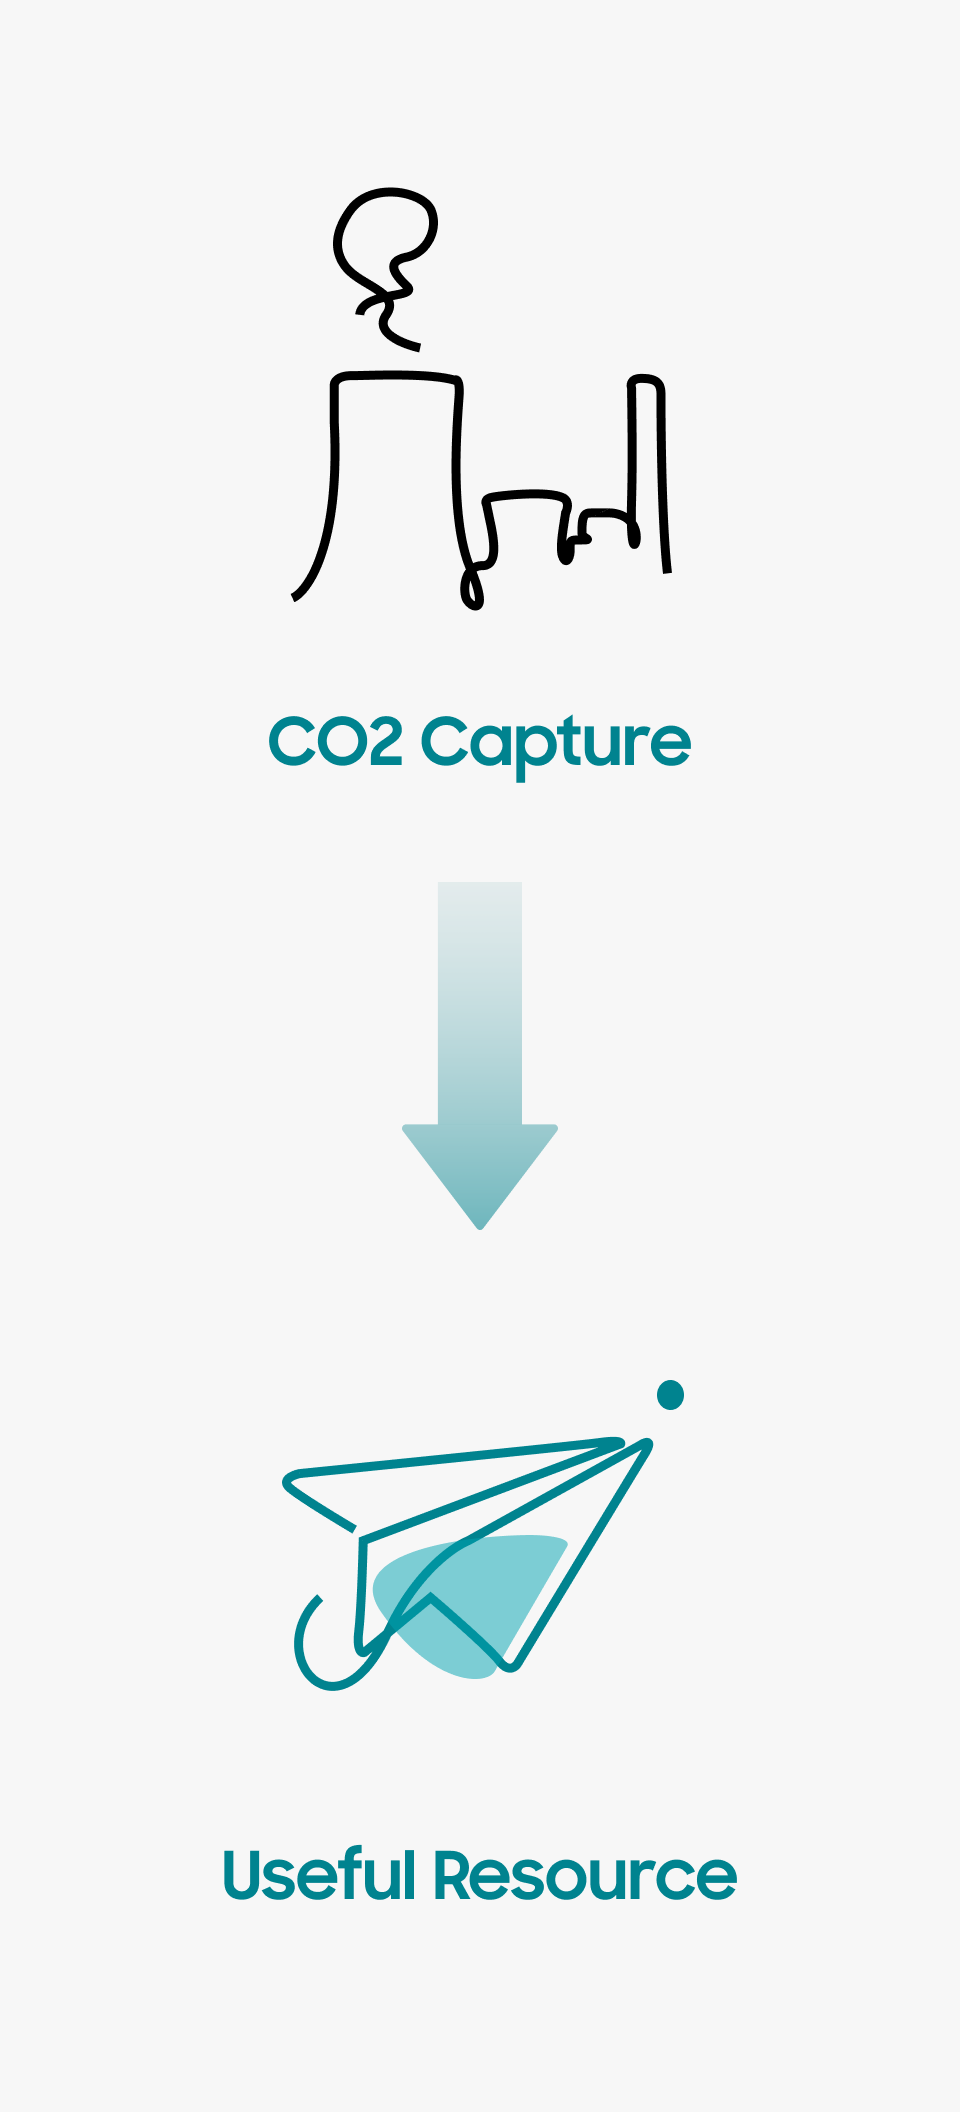 CO2 Capture Useful Resource